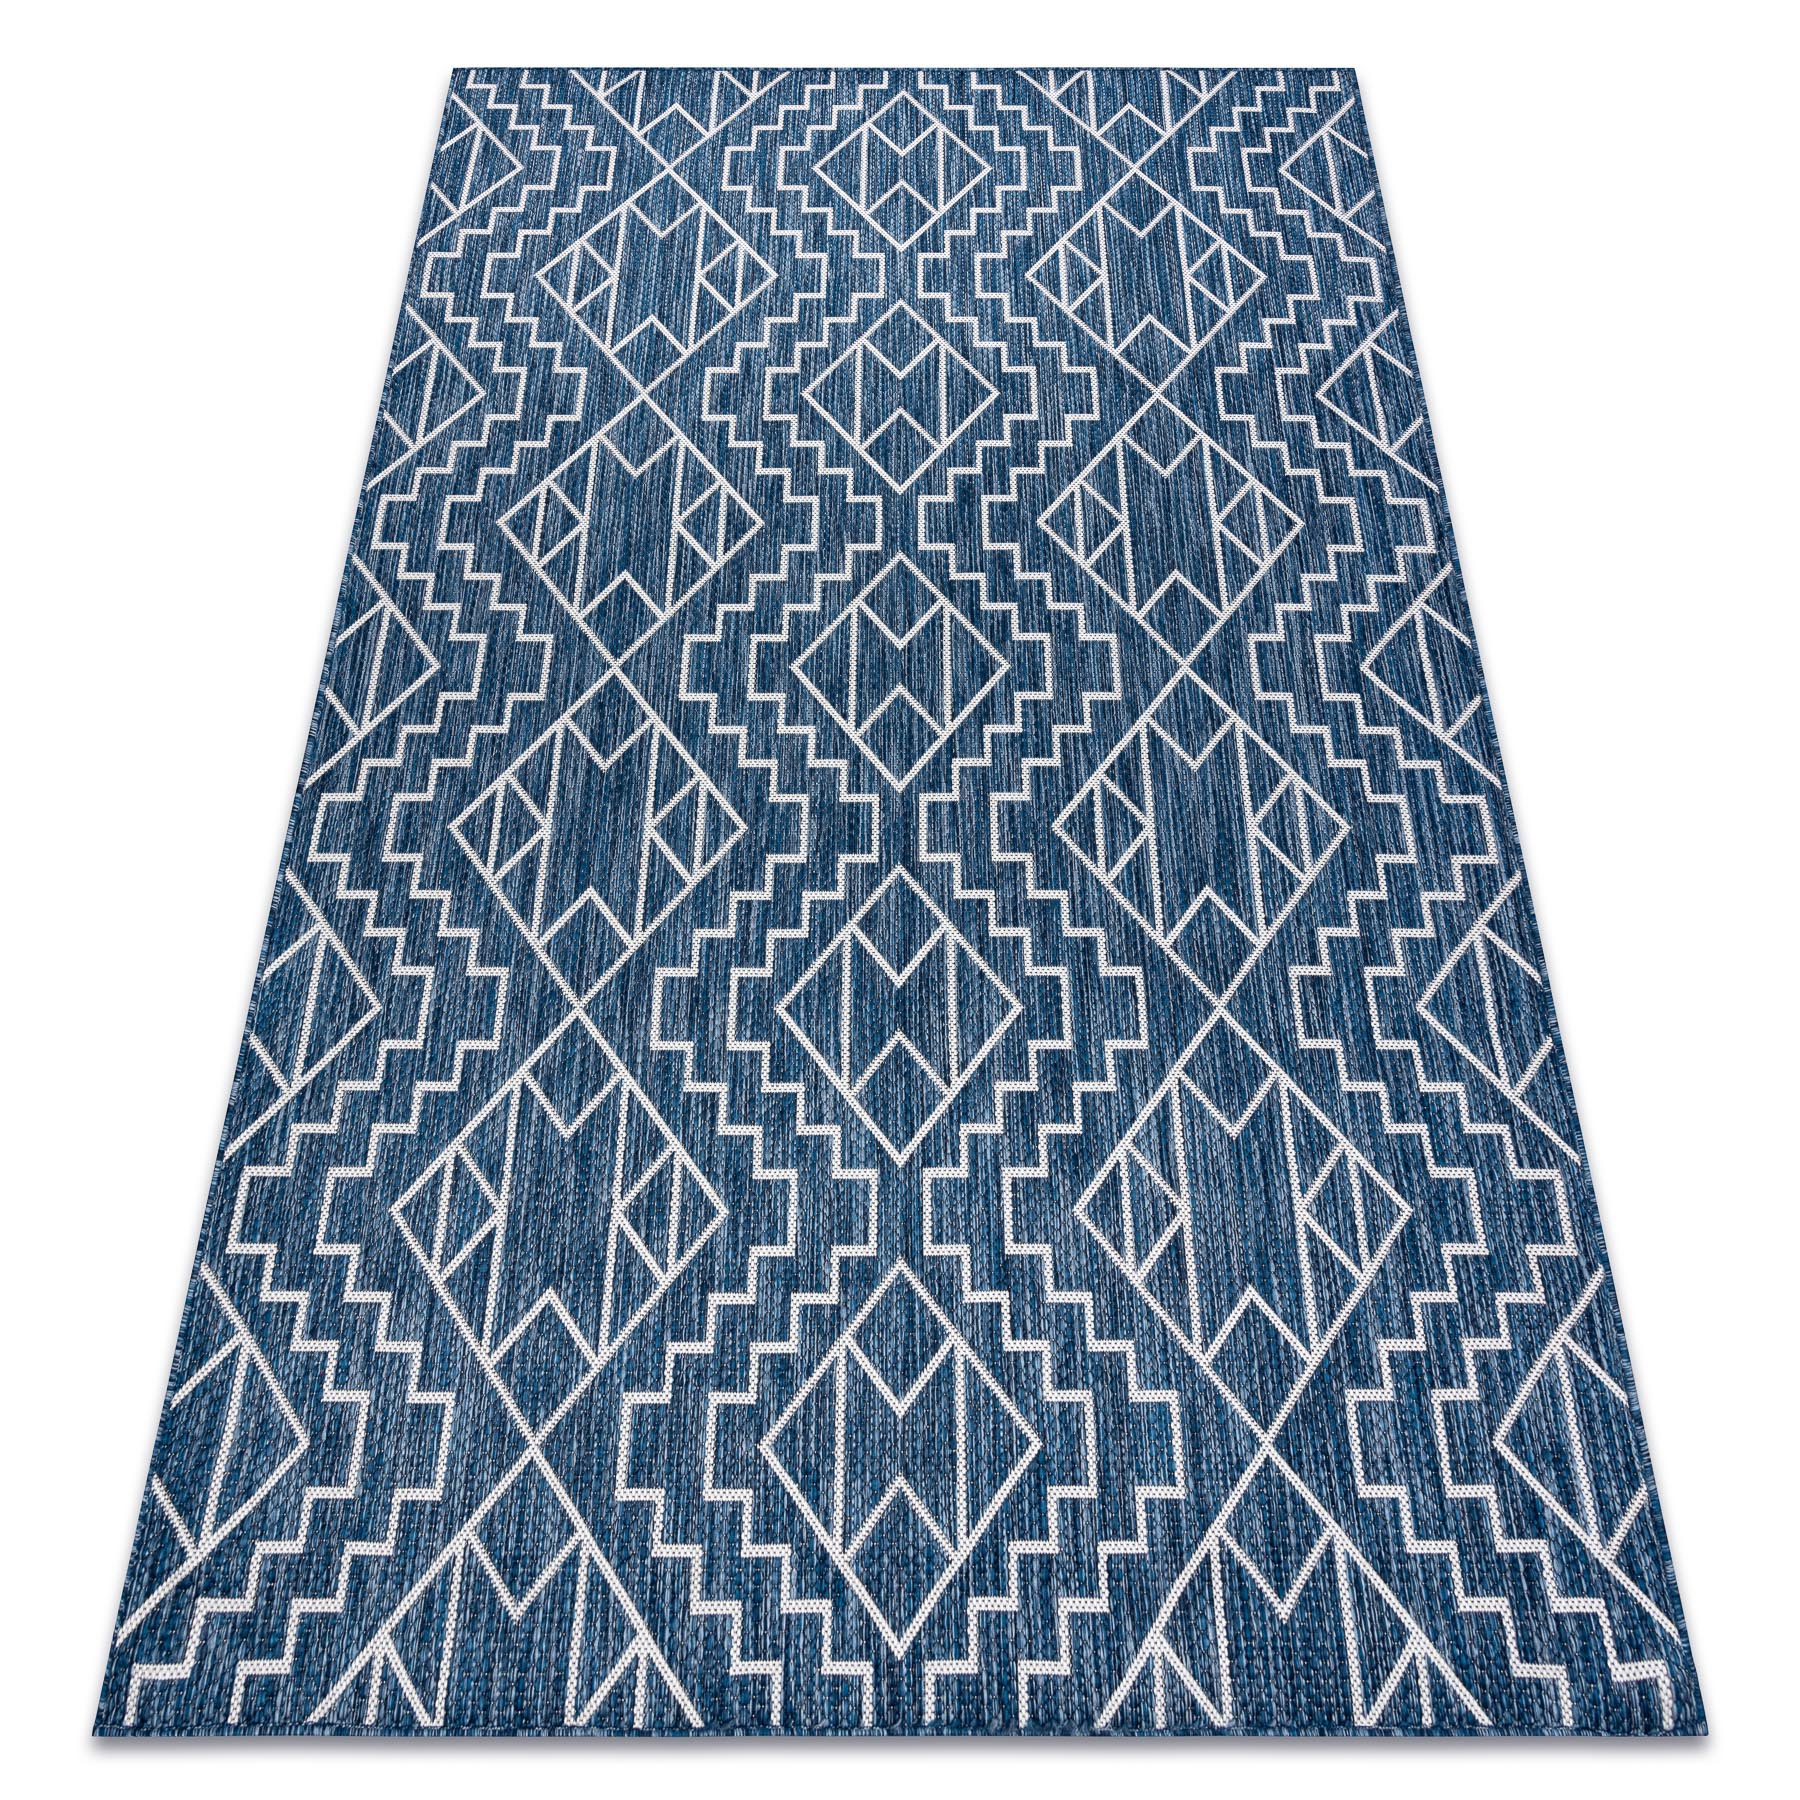 Details about   Modern Sisal Carpet Loft Diamonds Blue Flat Flor densely woven Best Quality show original title 